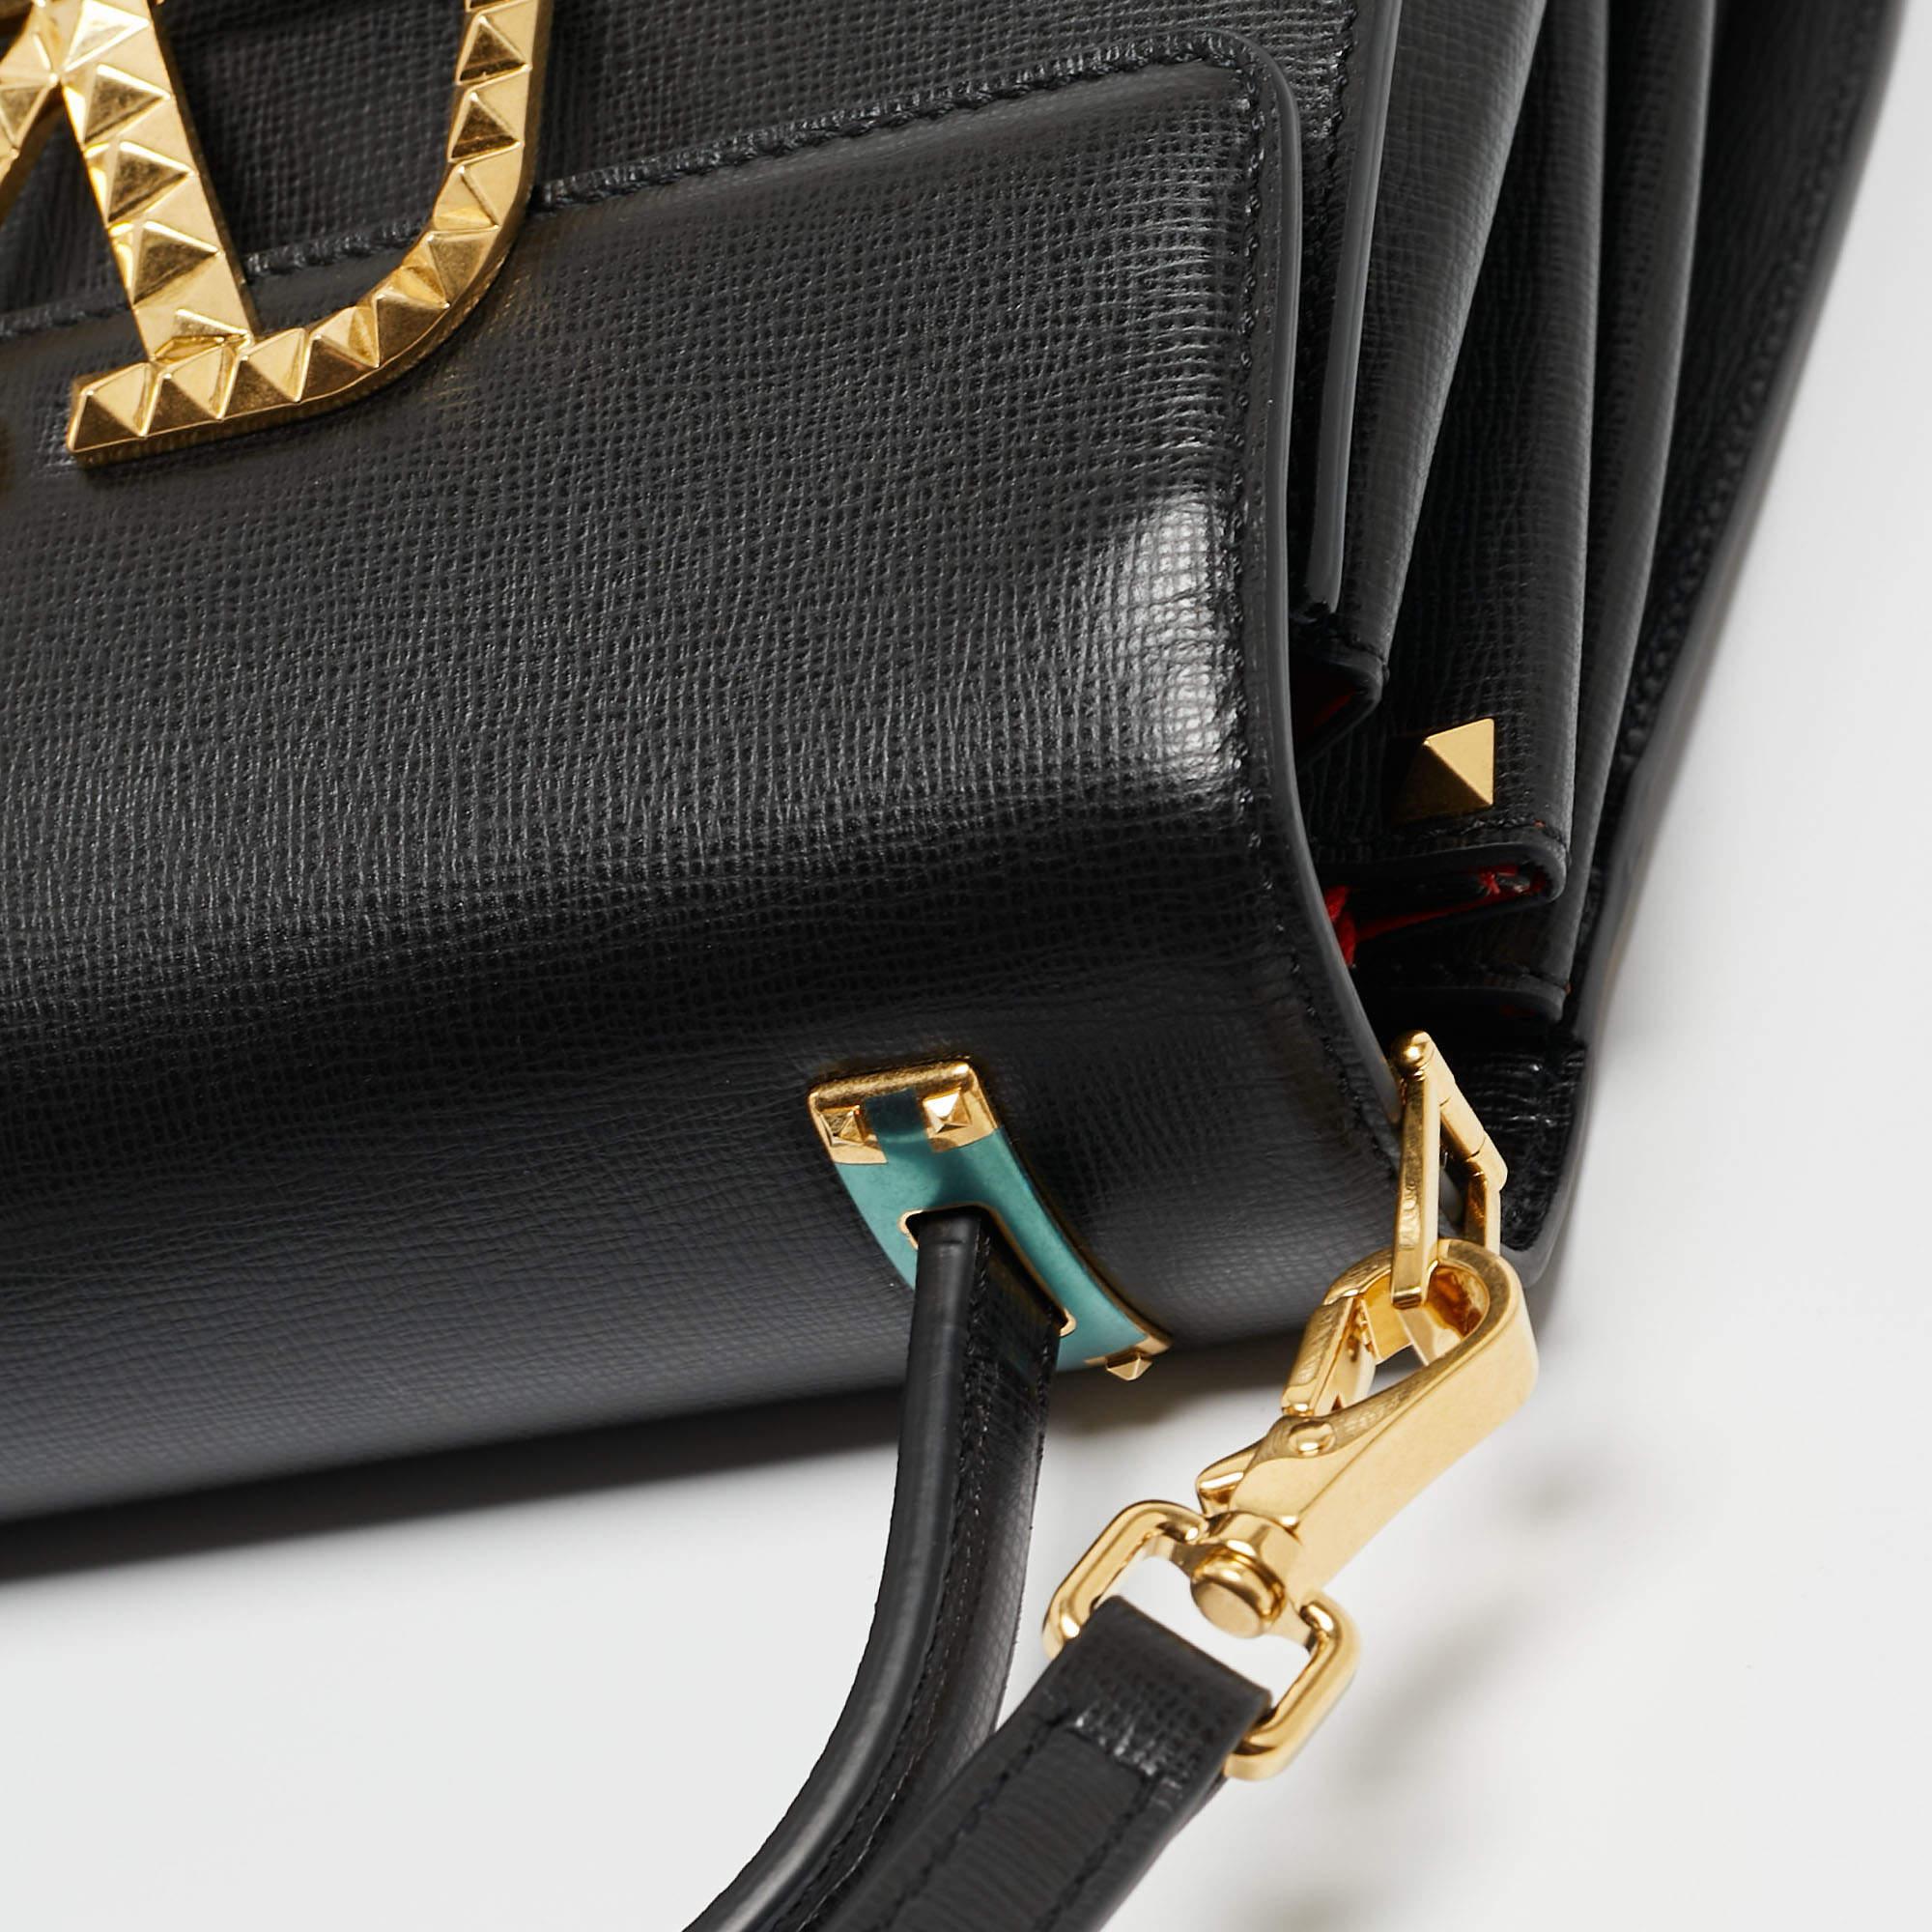 Women's Valentino Black Leather Small Alcove Top Handle Bag